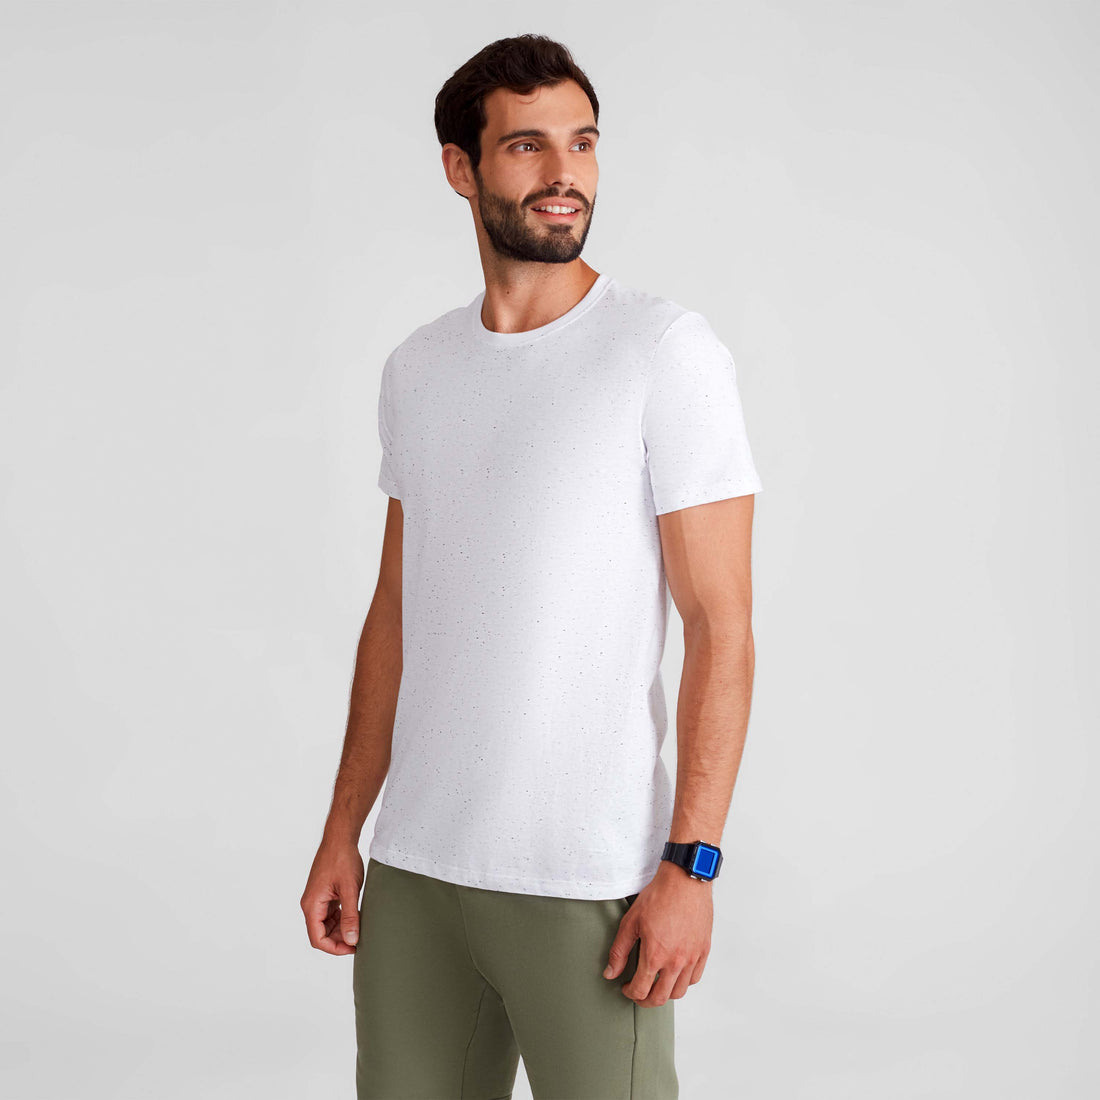 Camiseta Botonê Masculina - Branco